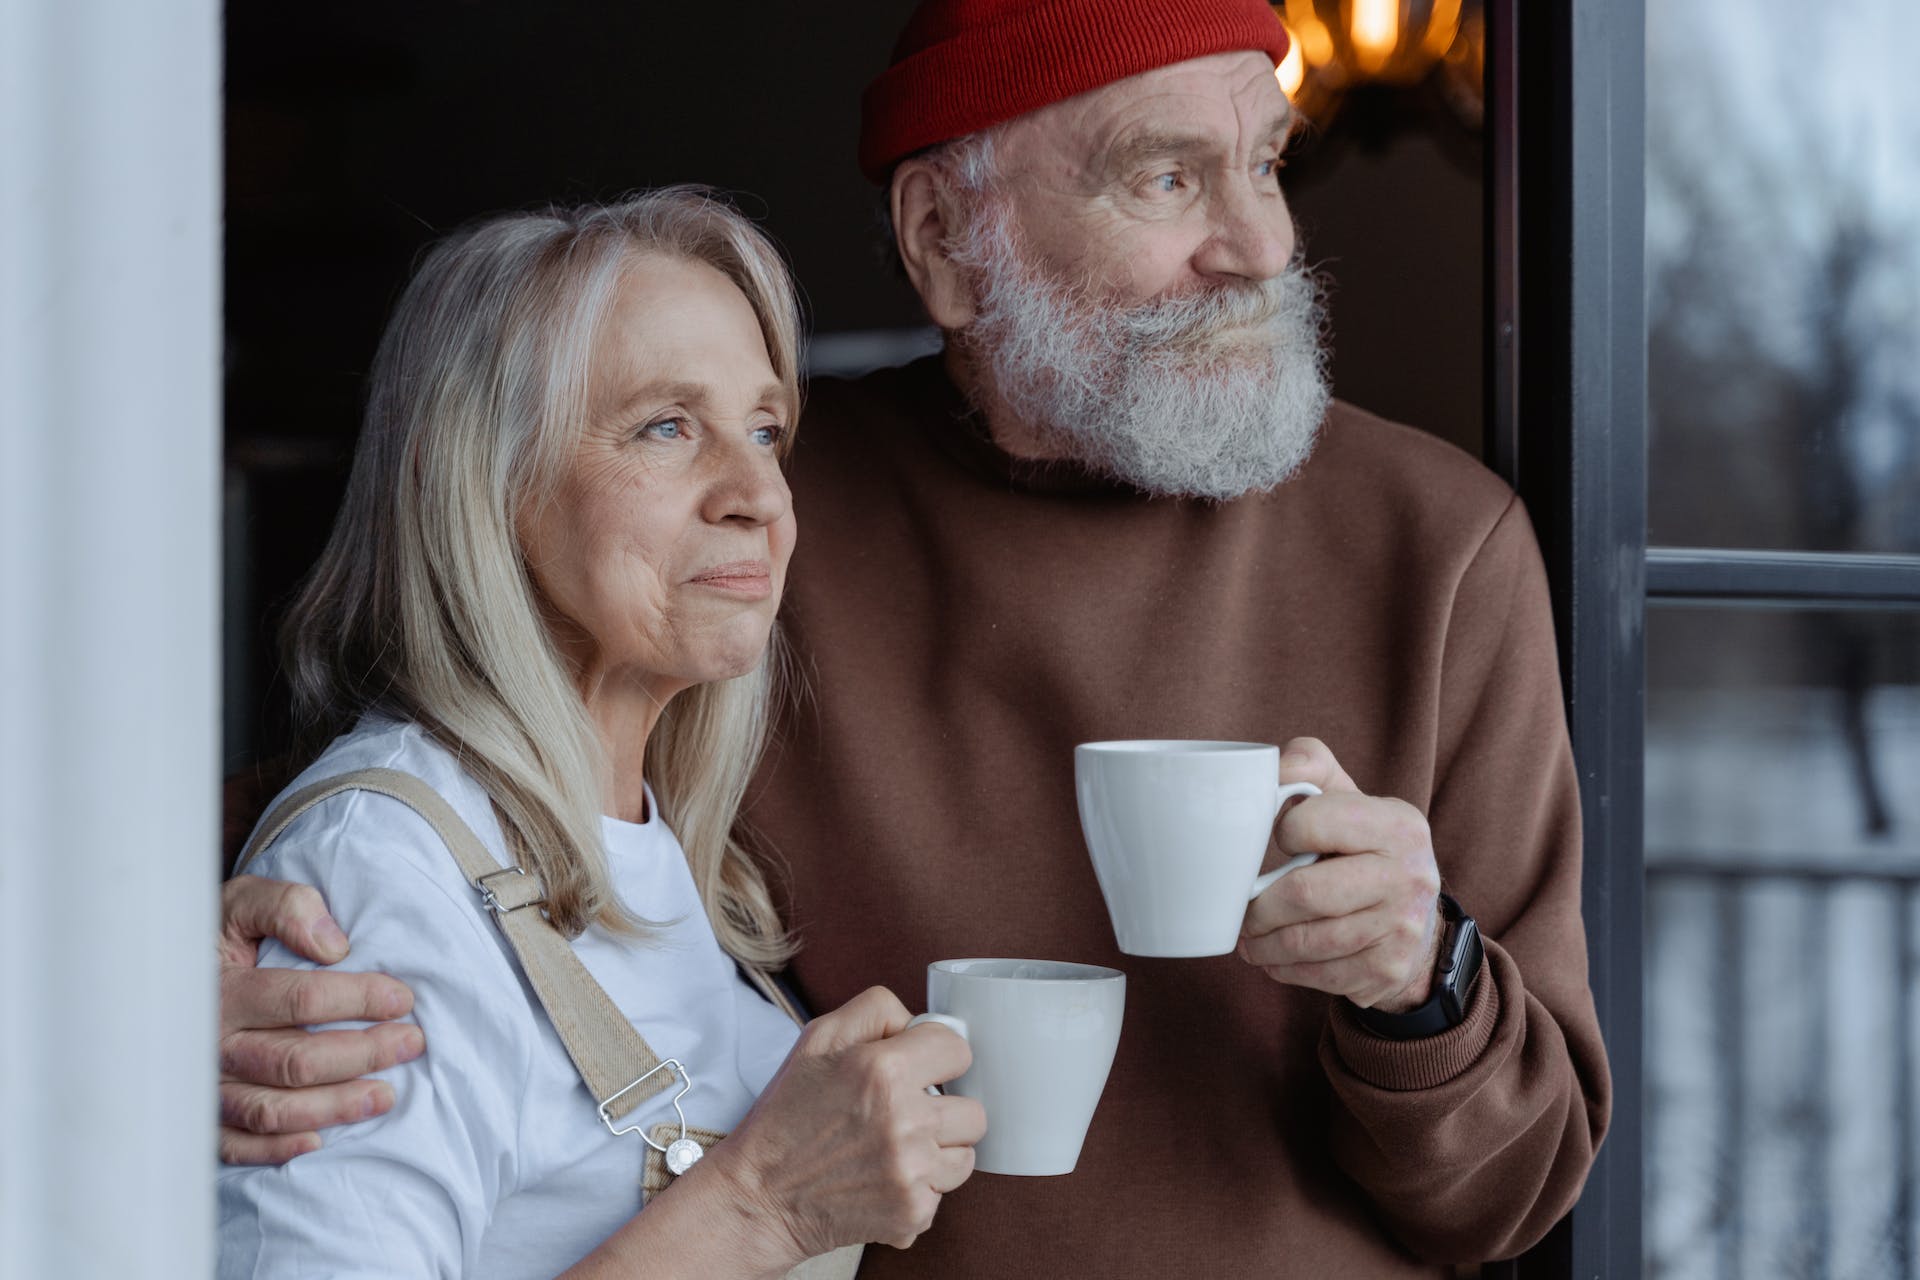 An older couple | Source: Pexels